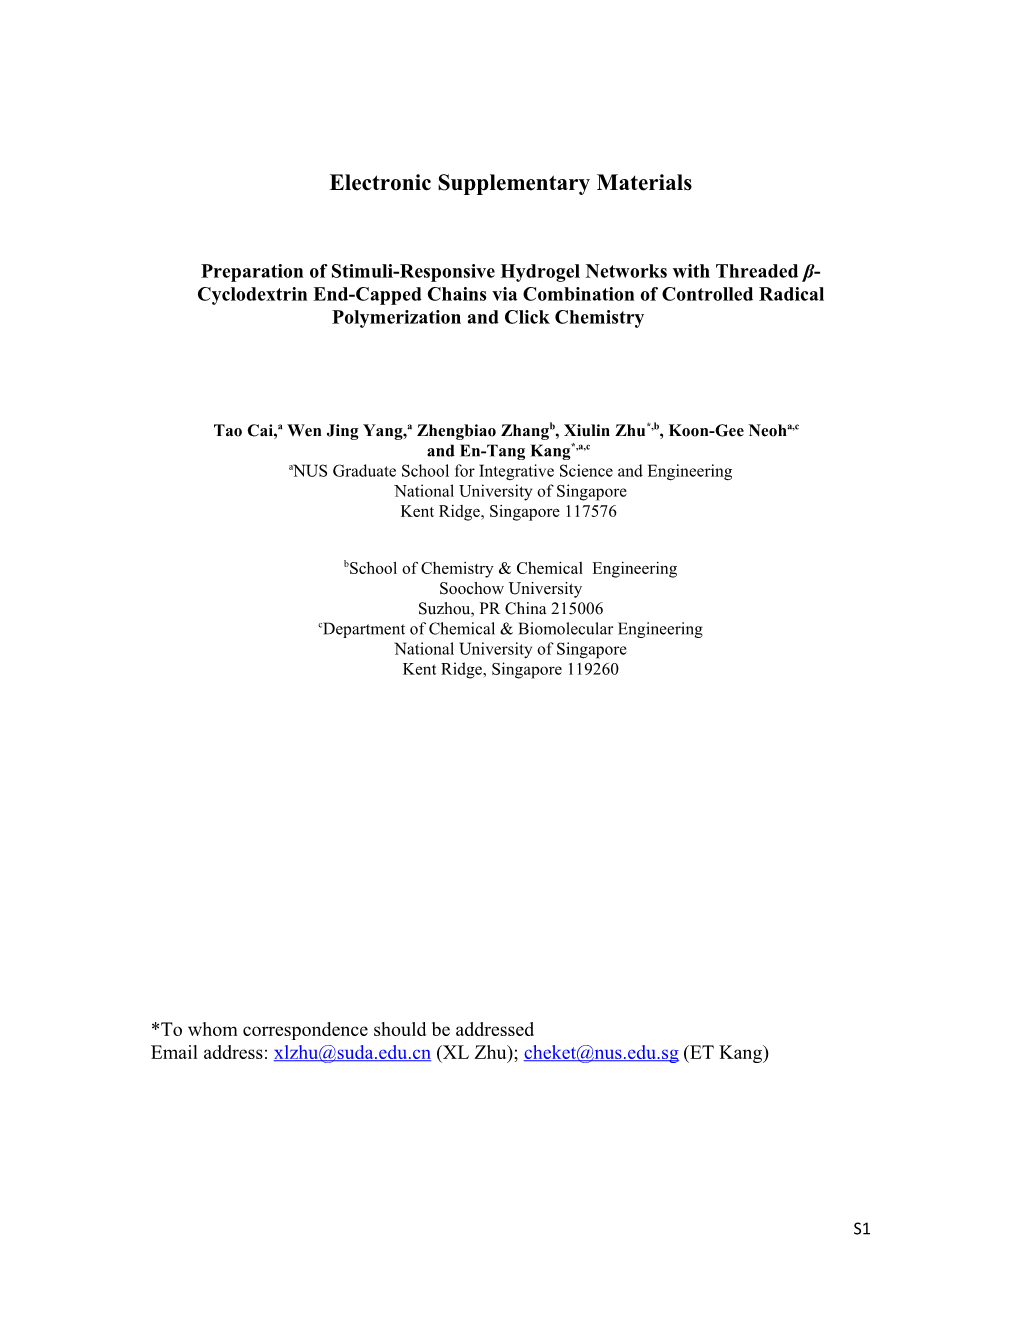 Electronic Supplementarymaterials